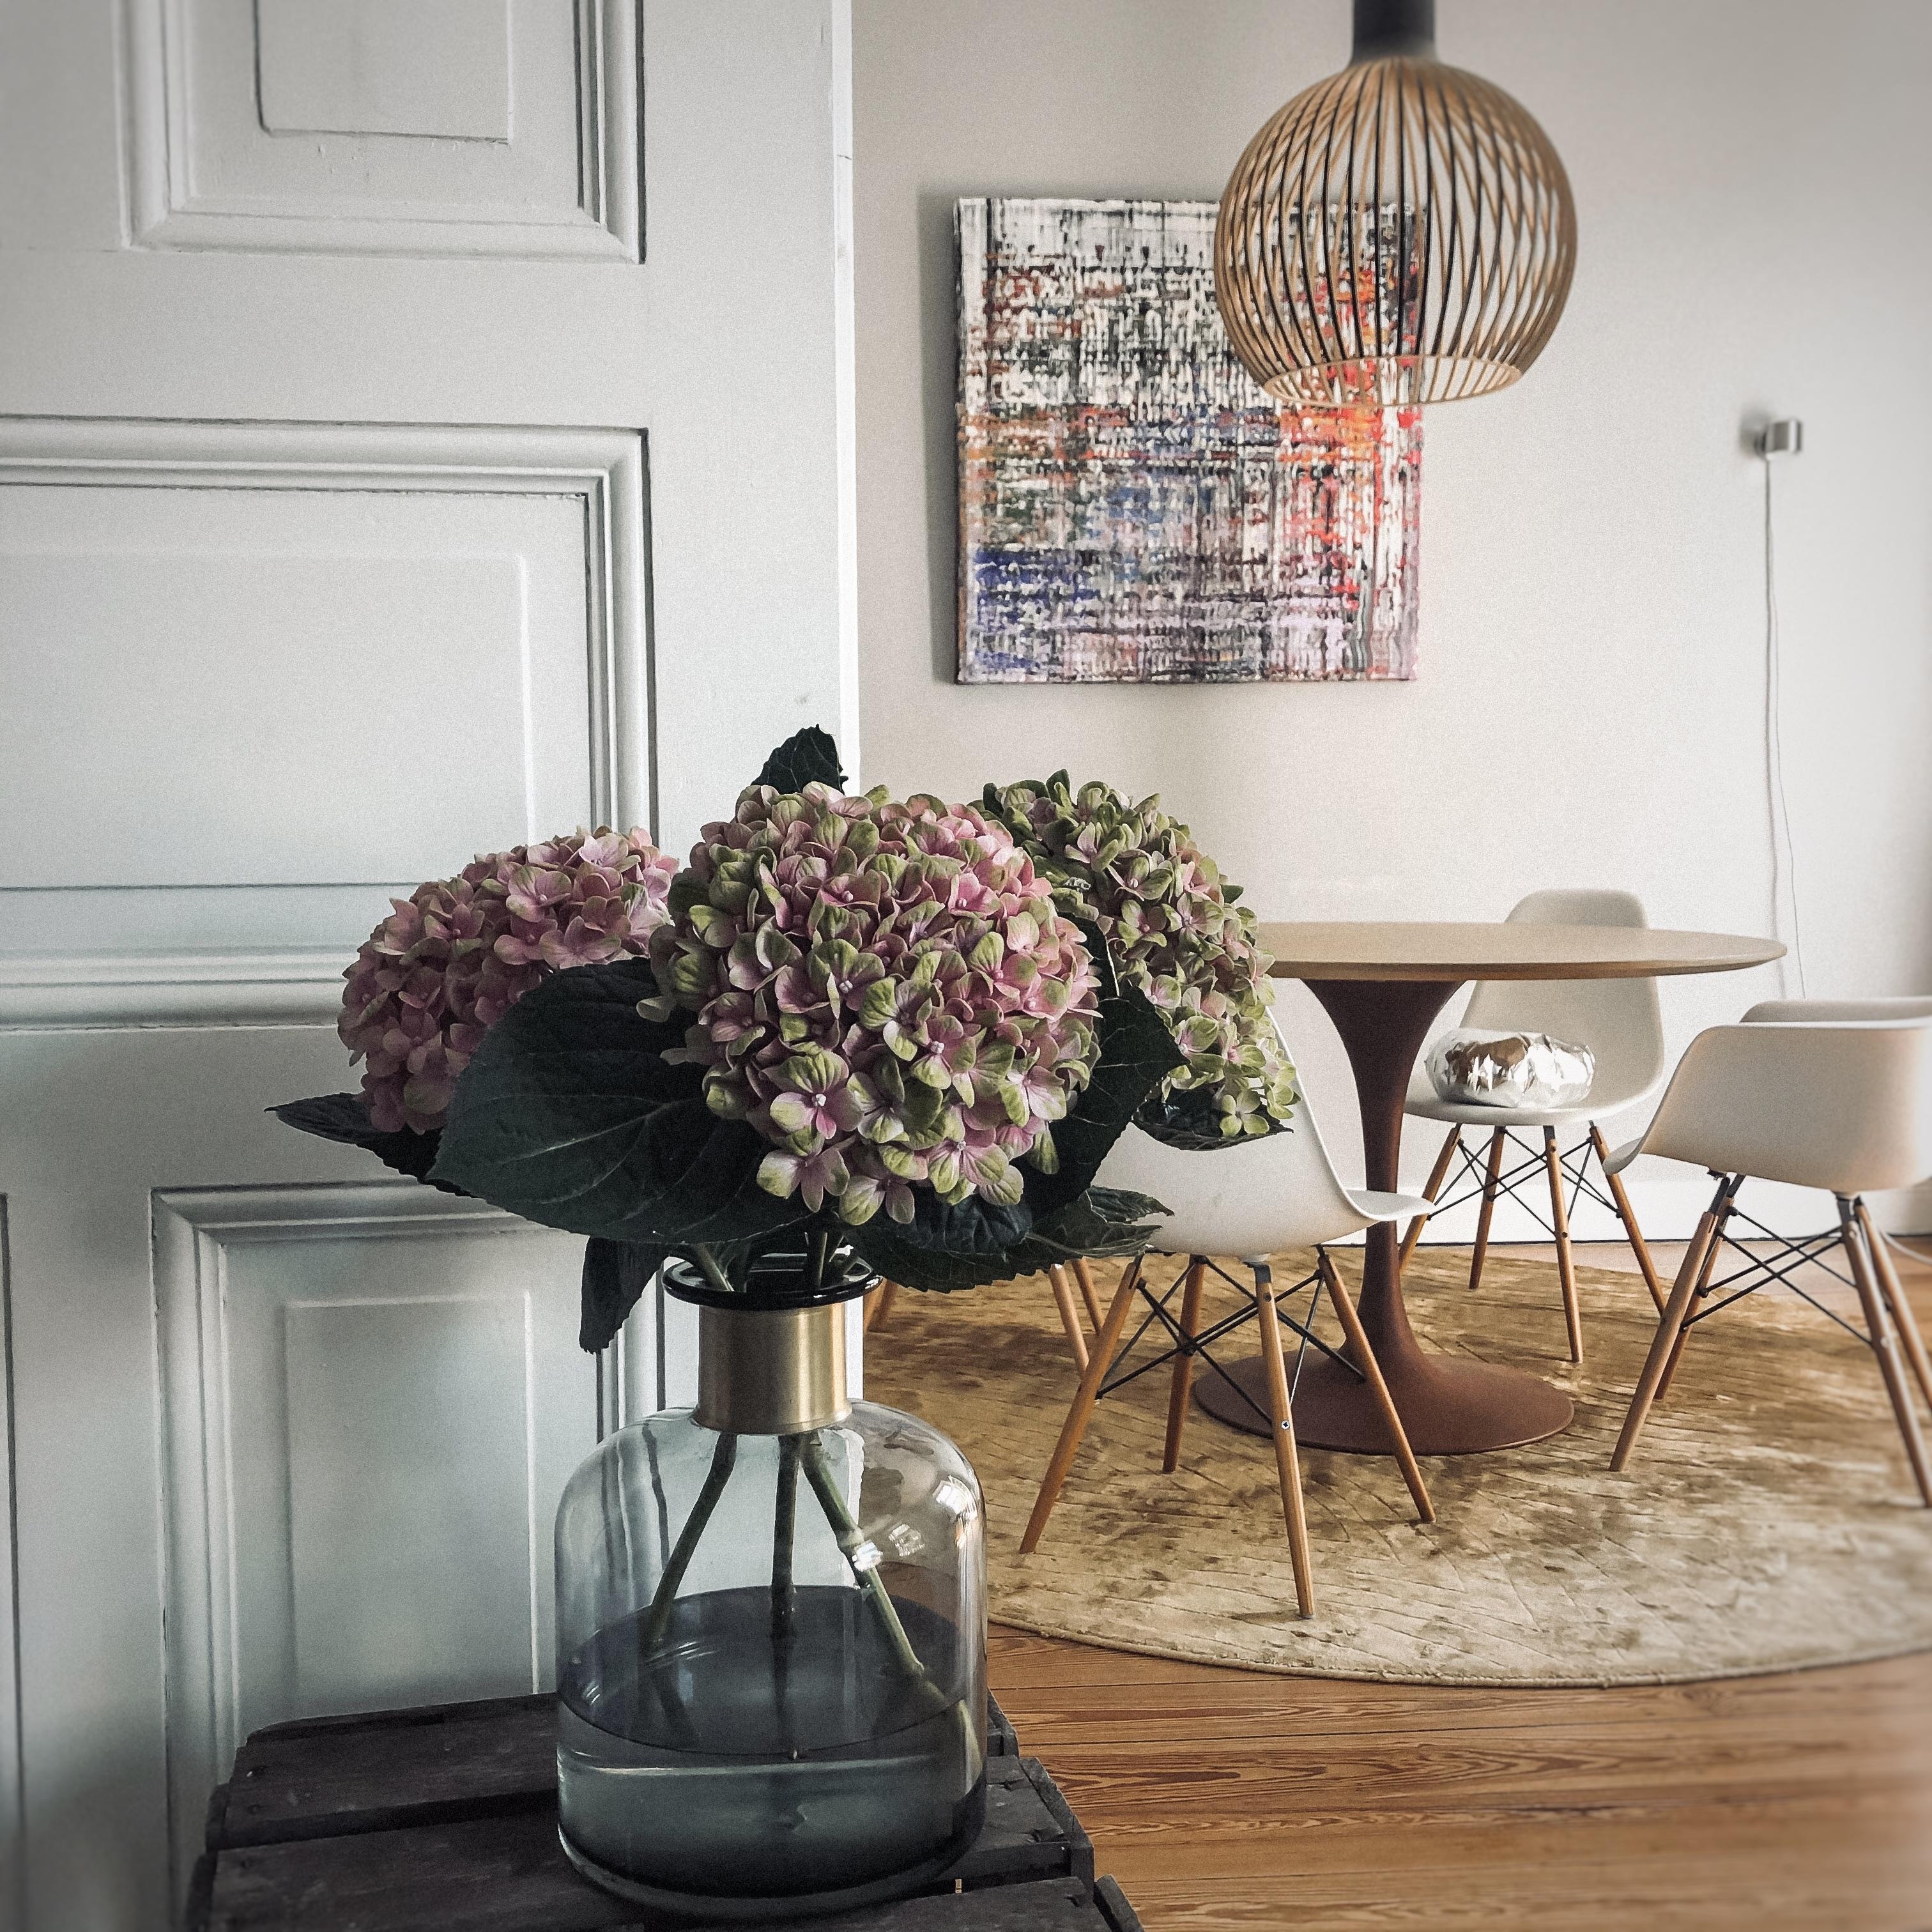 happy views am Sonntag #nordicroom #hortensie #living #vase #minimalsim #couchstyle #interiorstyle #interiors